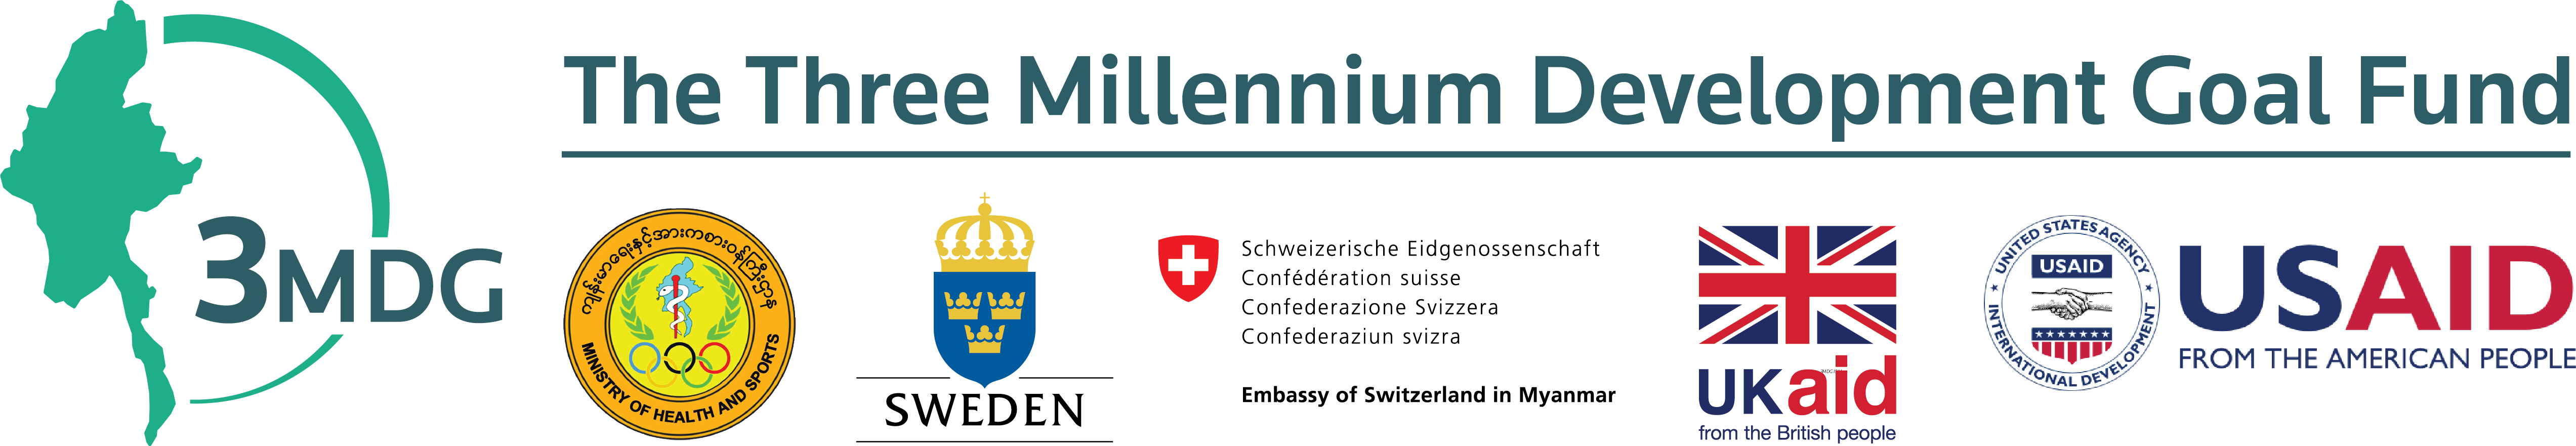 The Three Millenium Development Goal Fund - Department For International Development (5090x881)